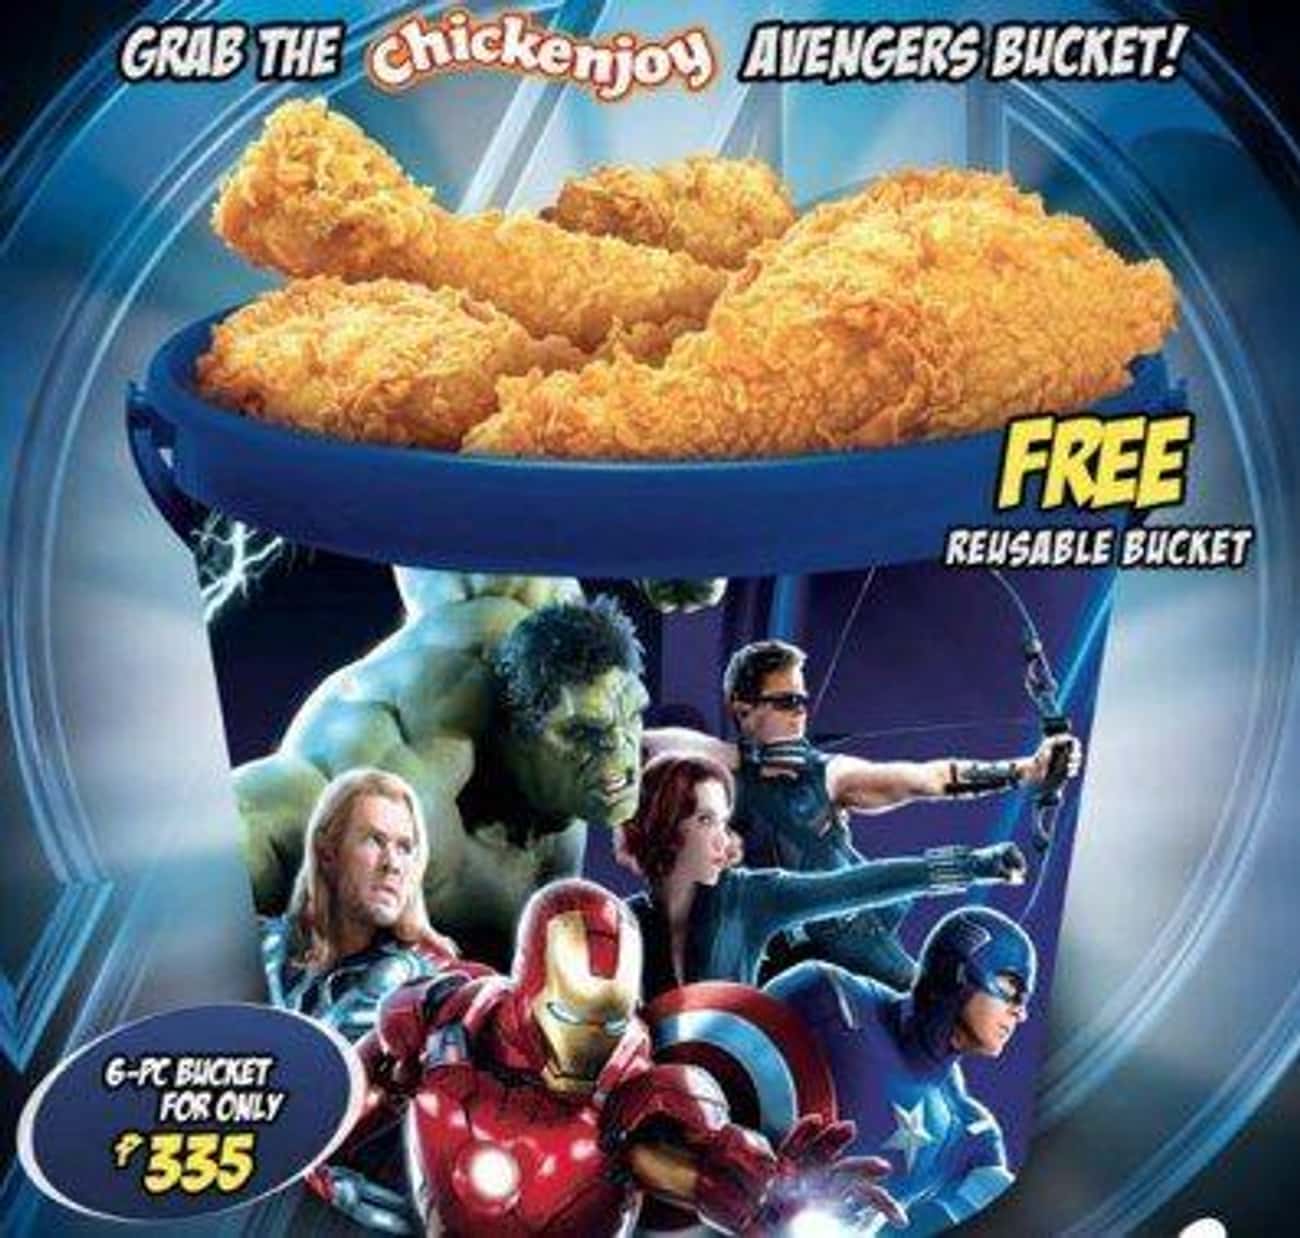 Reusable Avengers Chicken Bucket